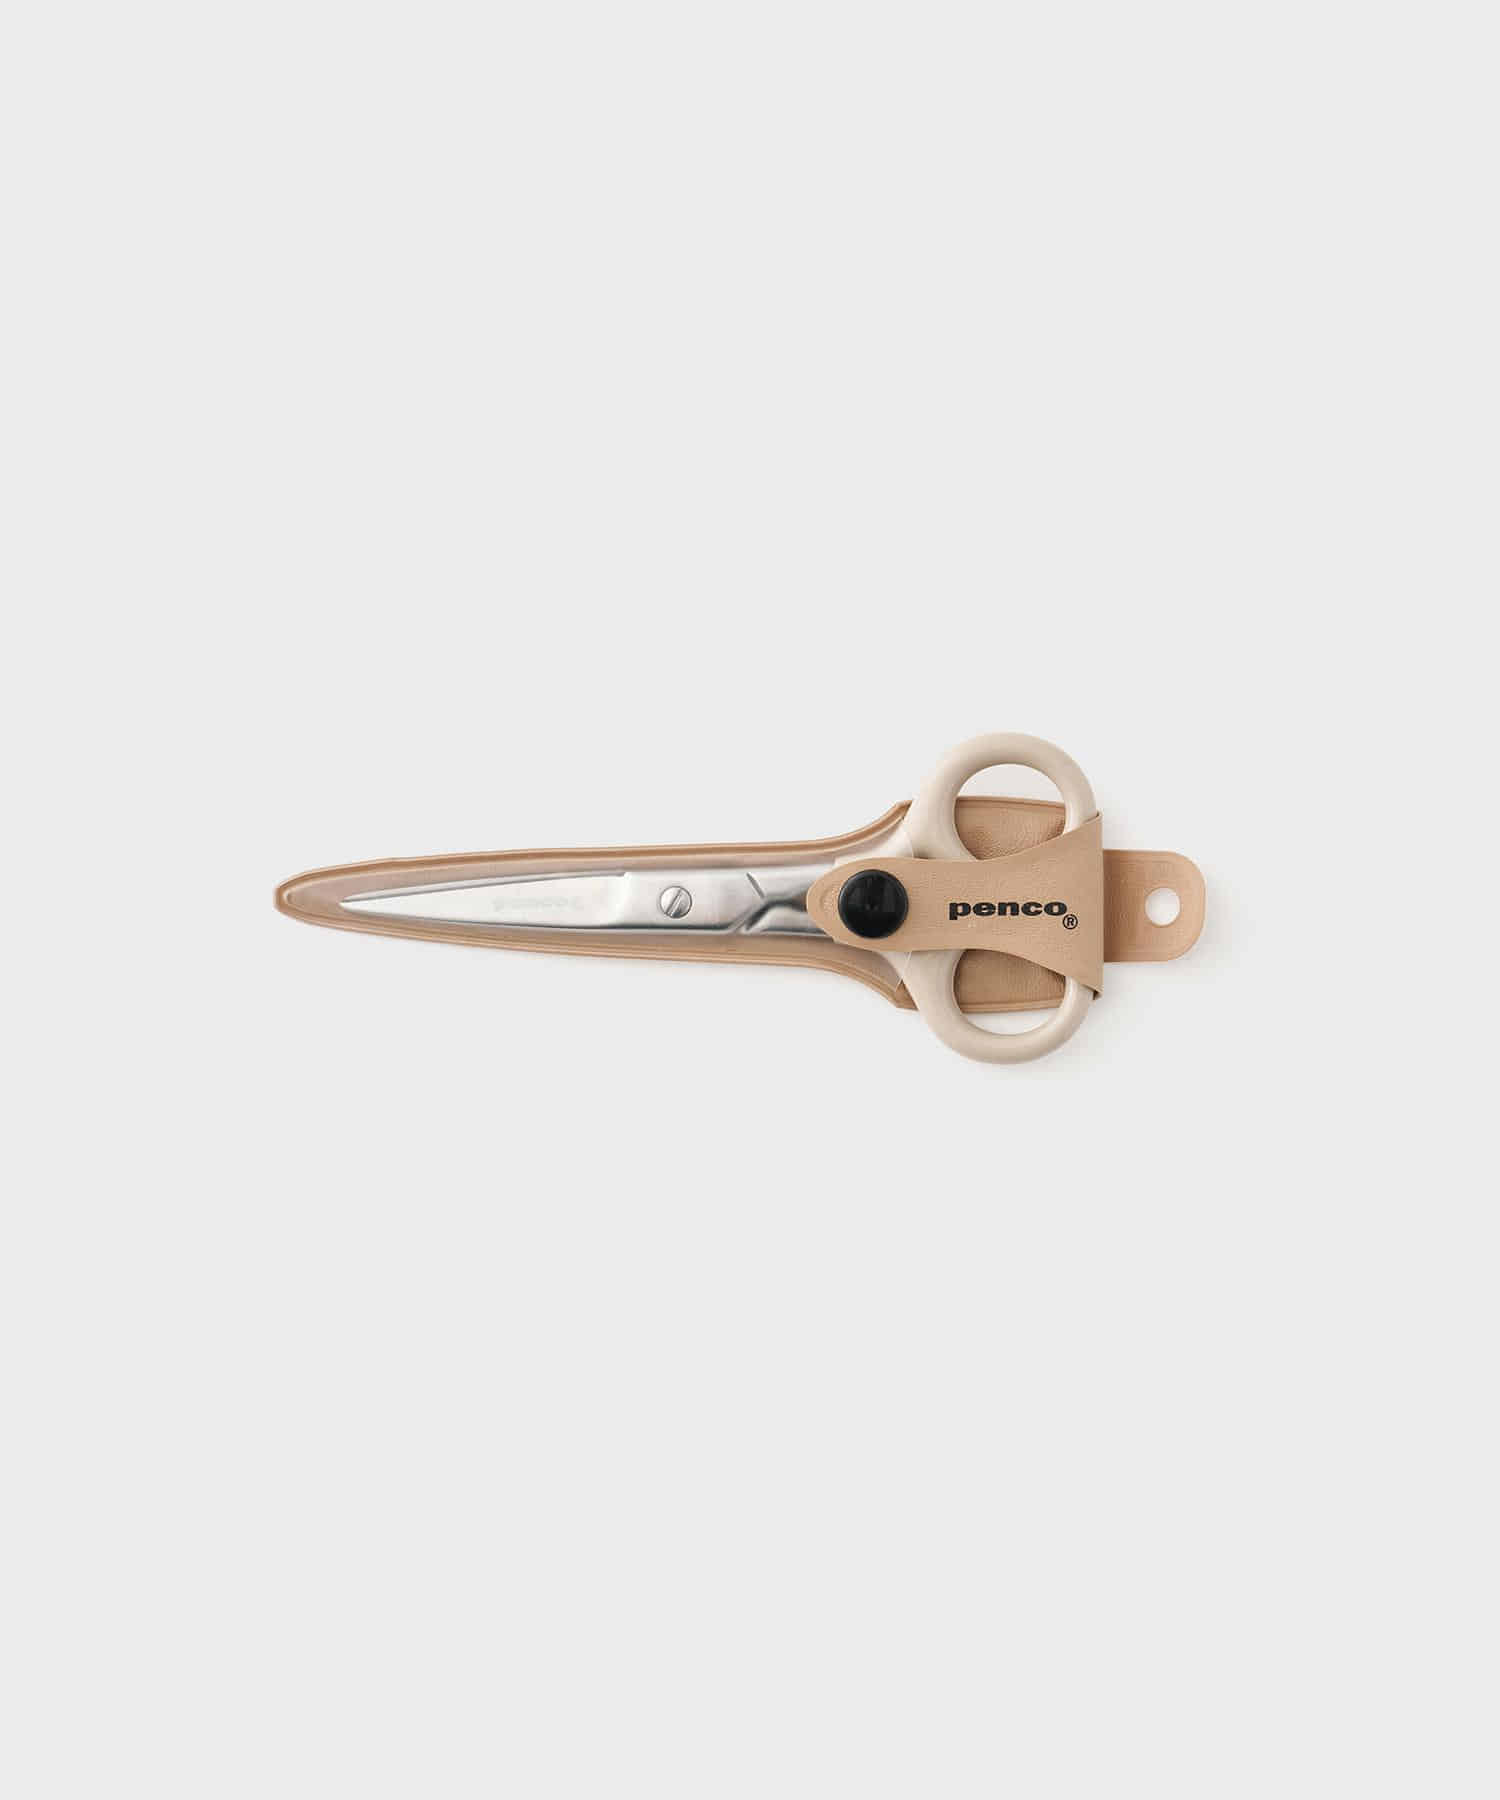 Penco Stainless Scissors (Ivory)